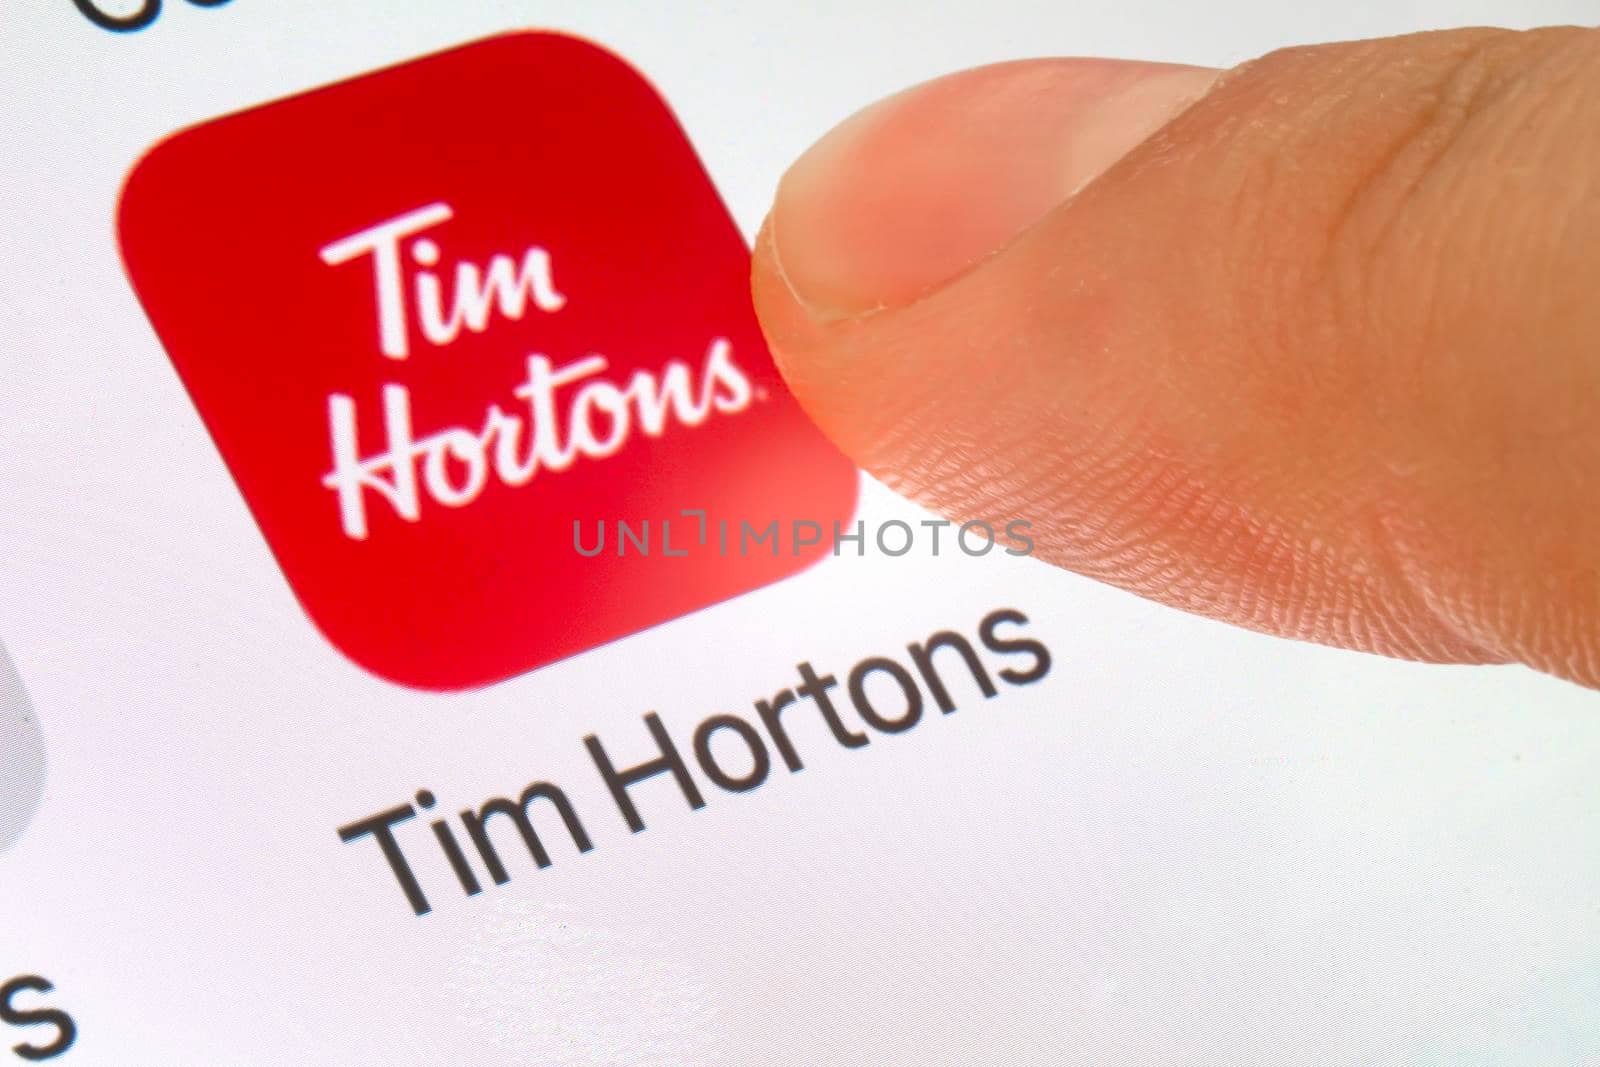 Calgary, Alberta. Canada. March 6, 2020. A person using the Tim Hortons app. Illustrative